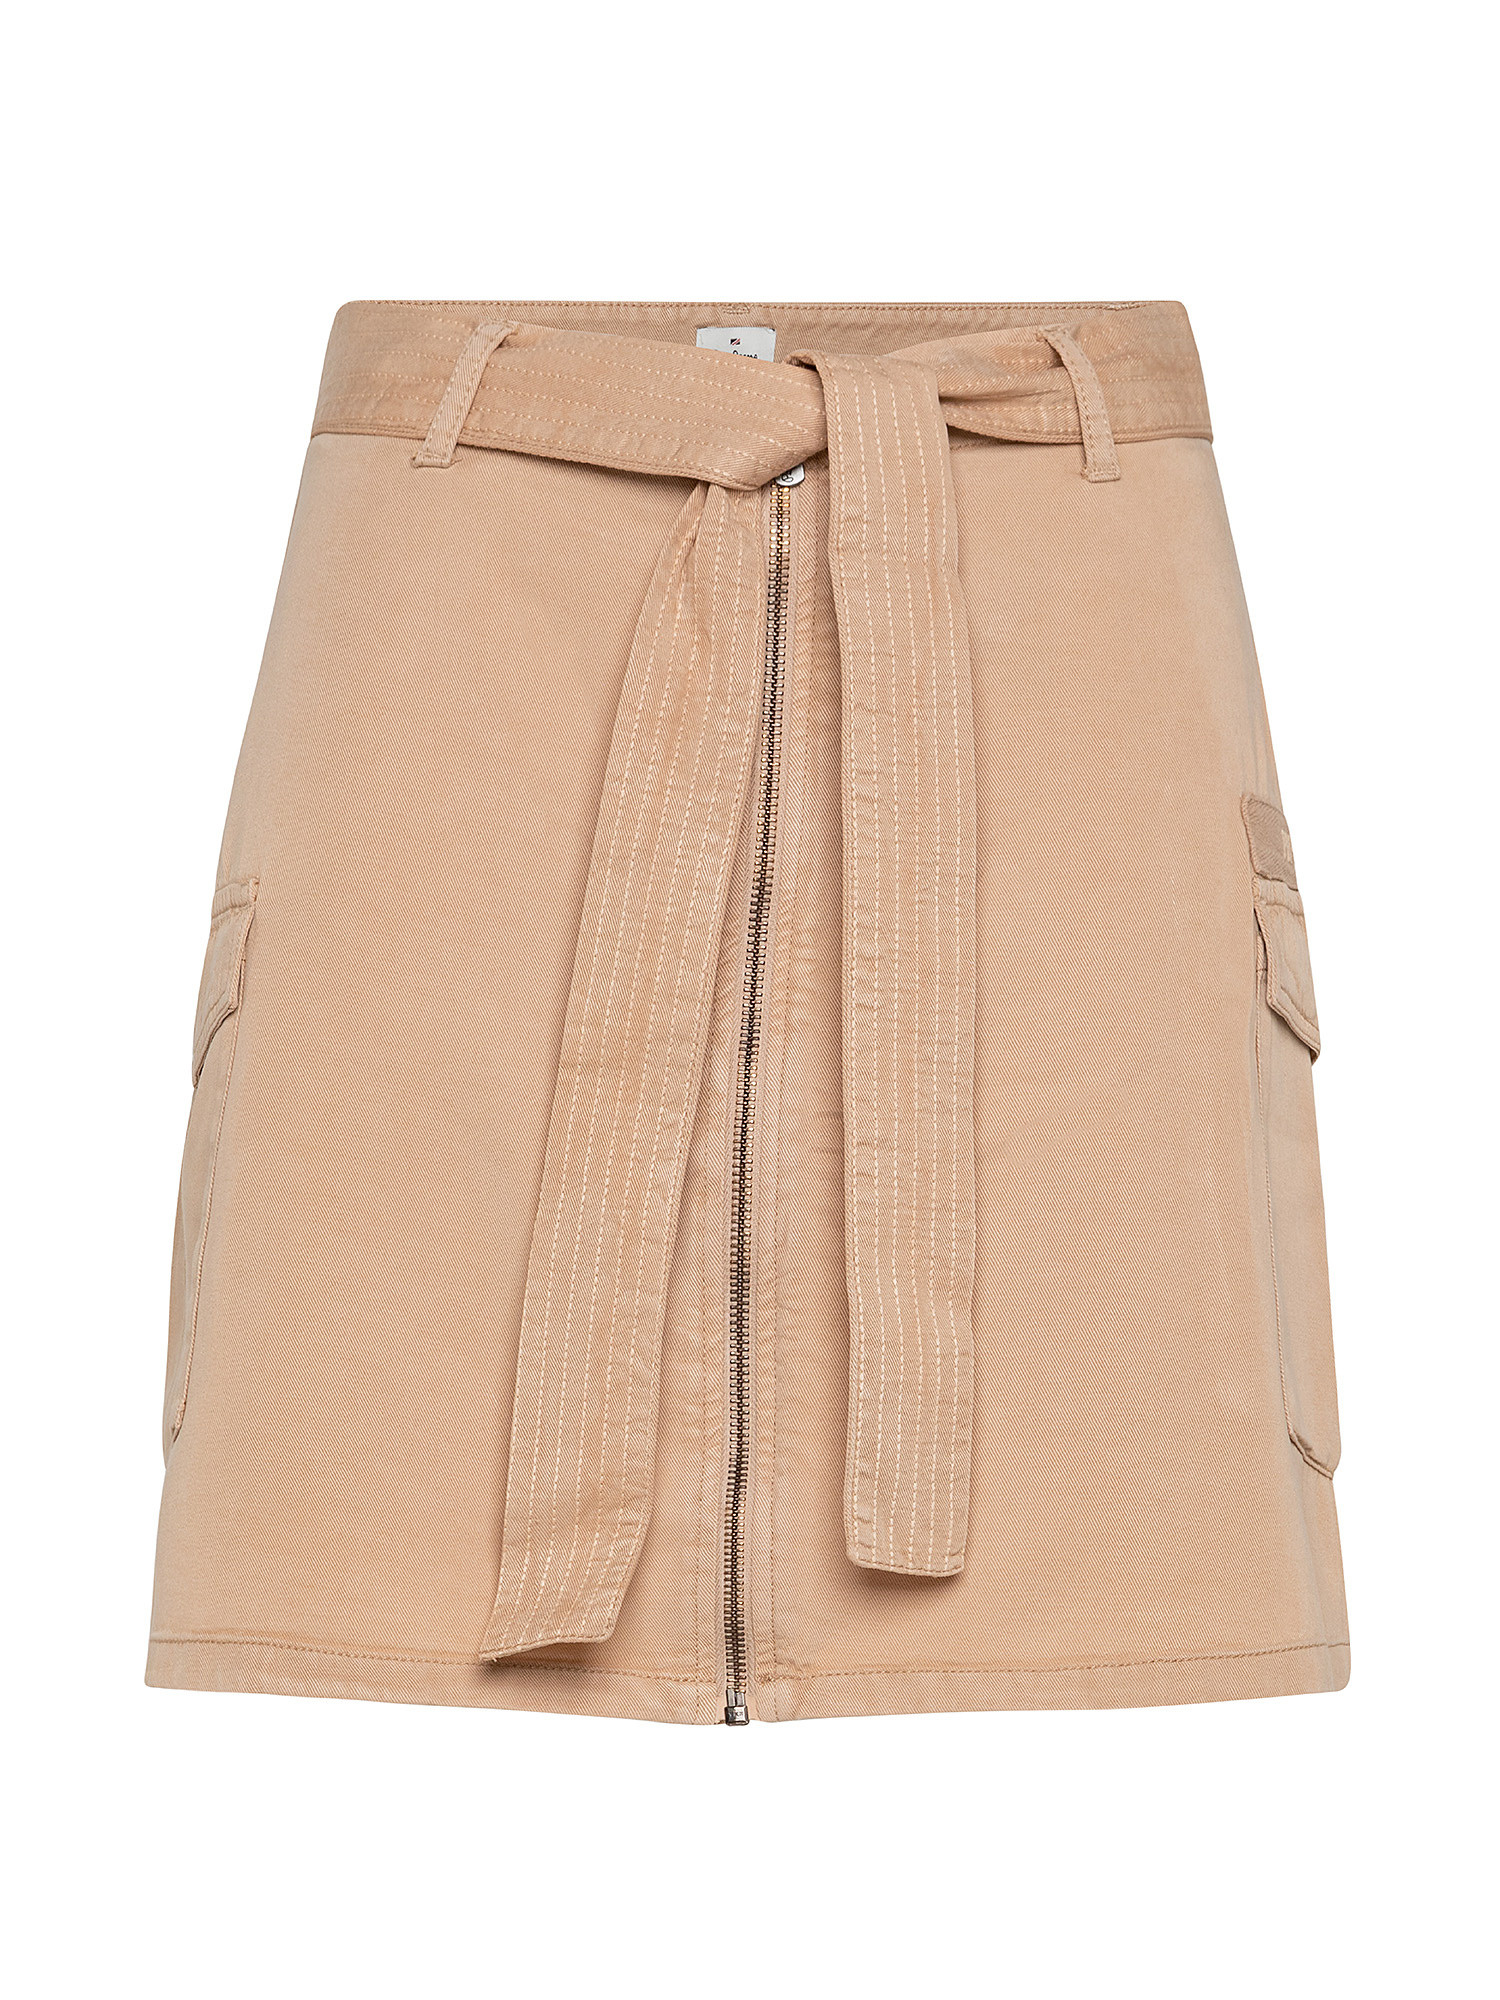 Floren skirt with zip, Beige, large image number 0